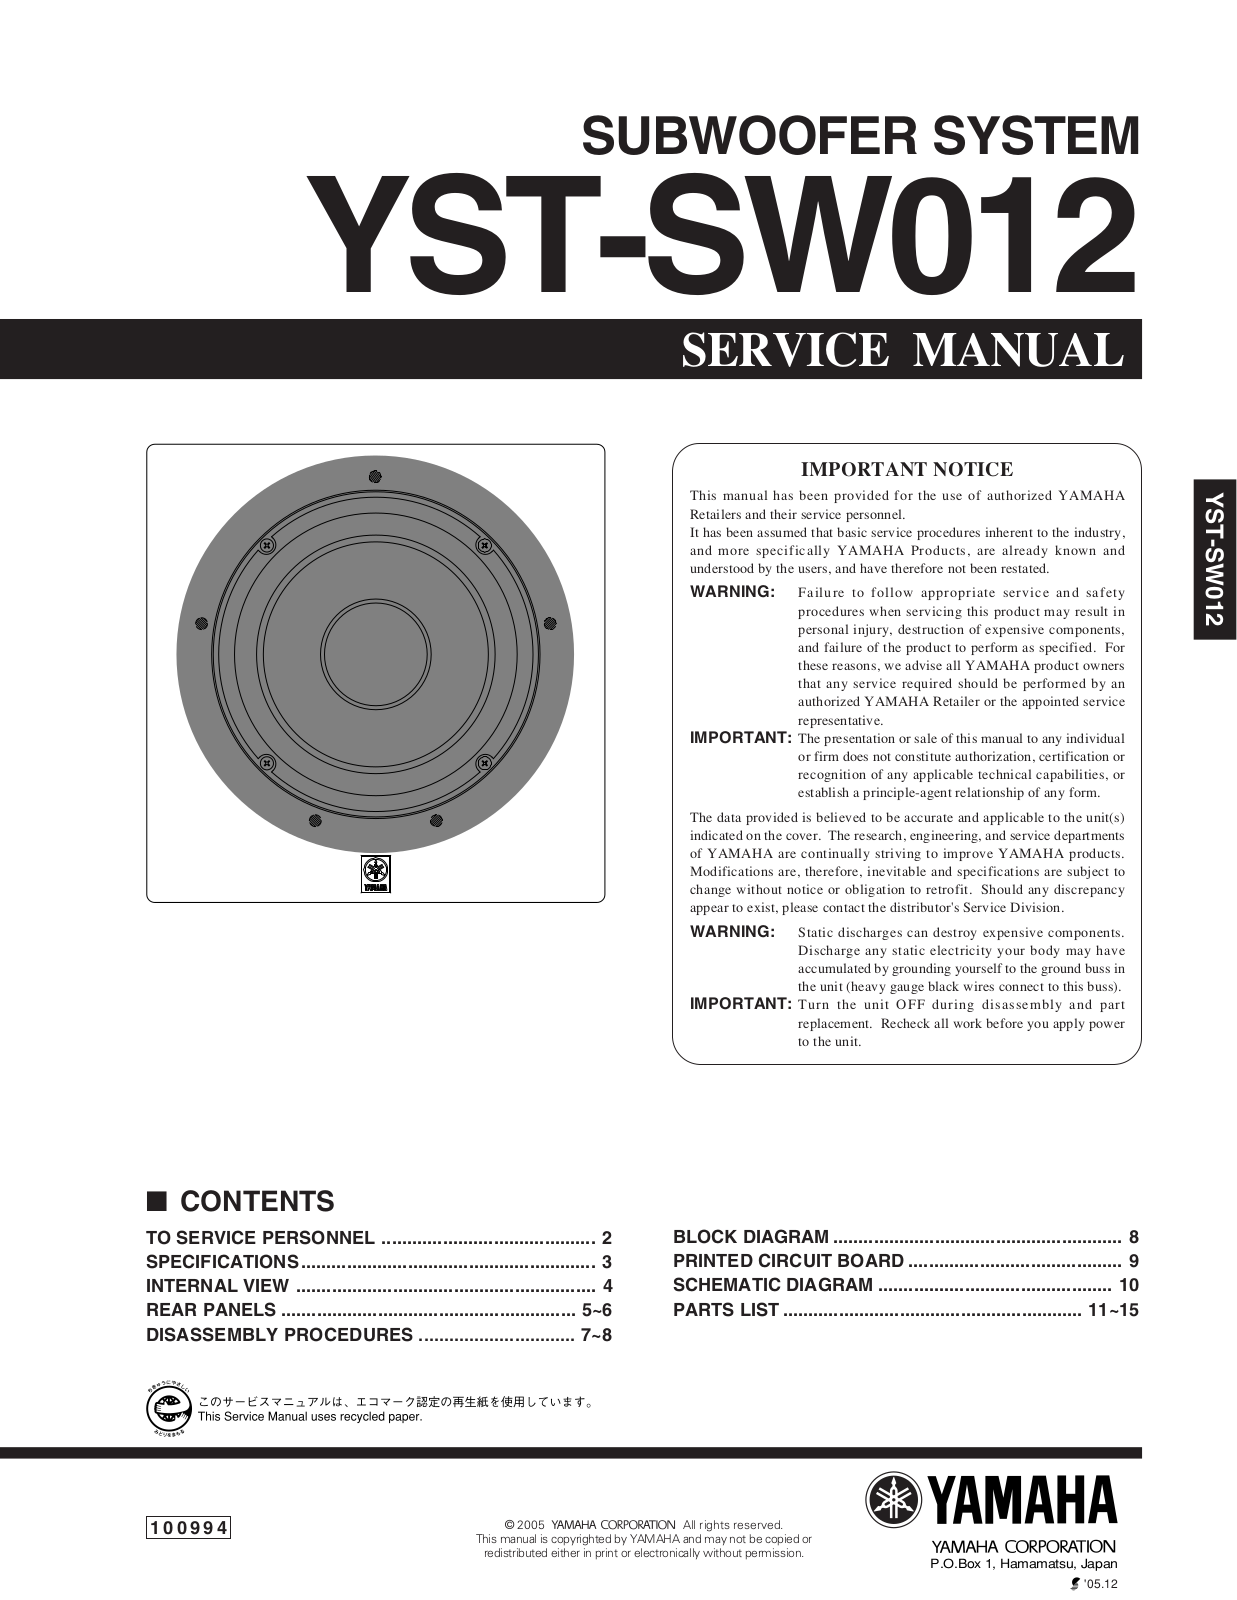 Yamaha YSTSW-012 Service manual